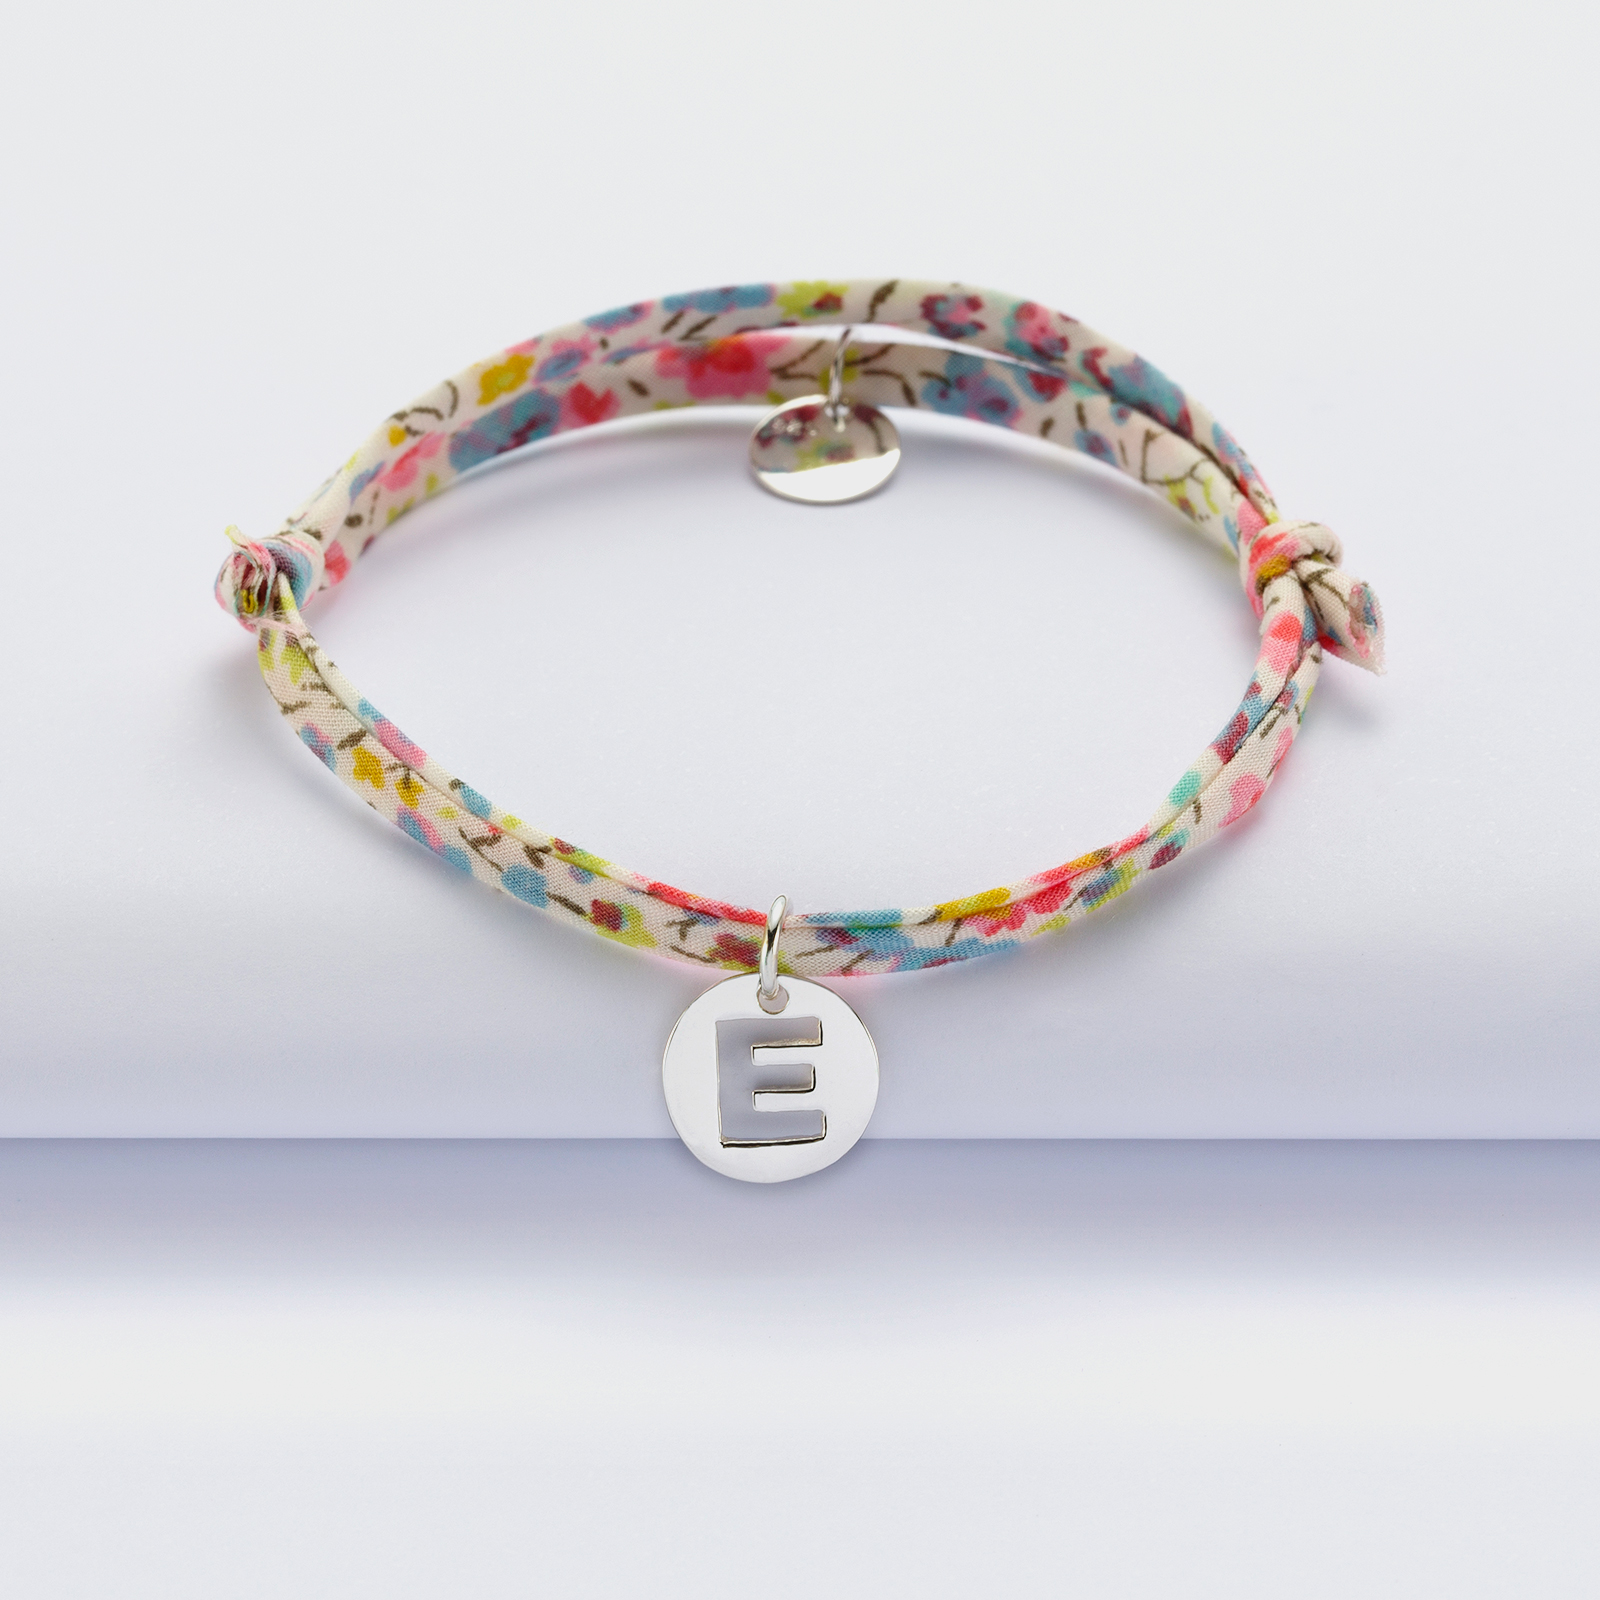 Personalised children Liberty bracelet silver initial letter pendant 11mm